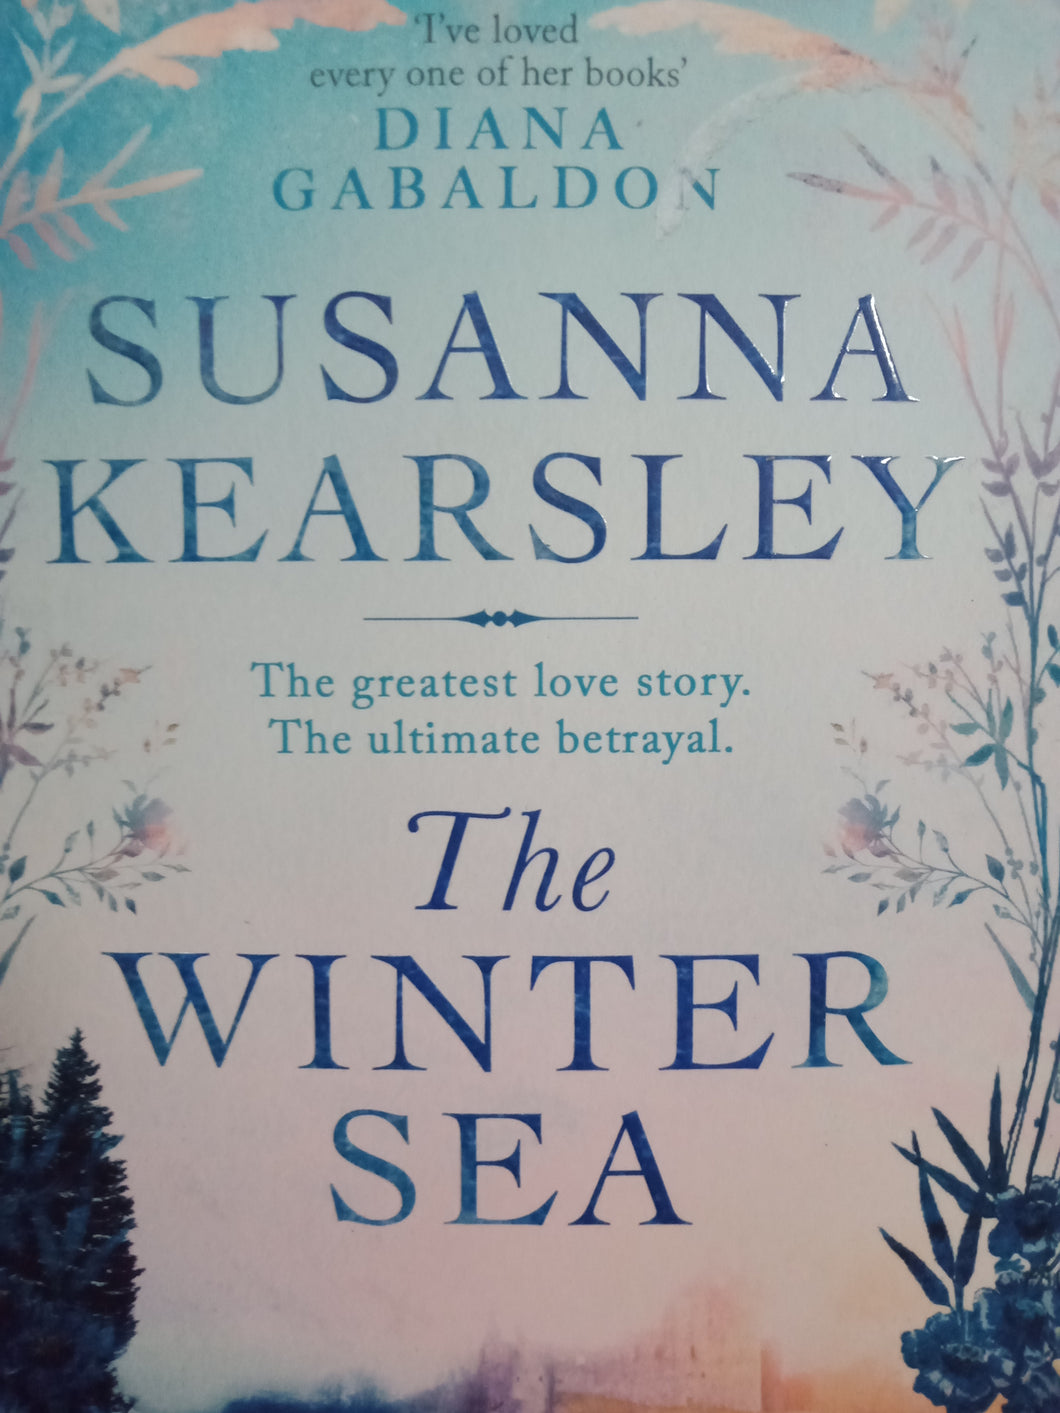 The Winter Sea by Susanna Kearsley